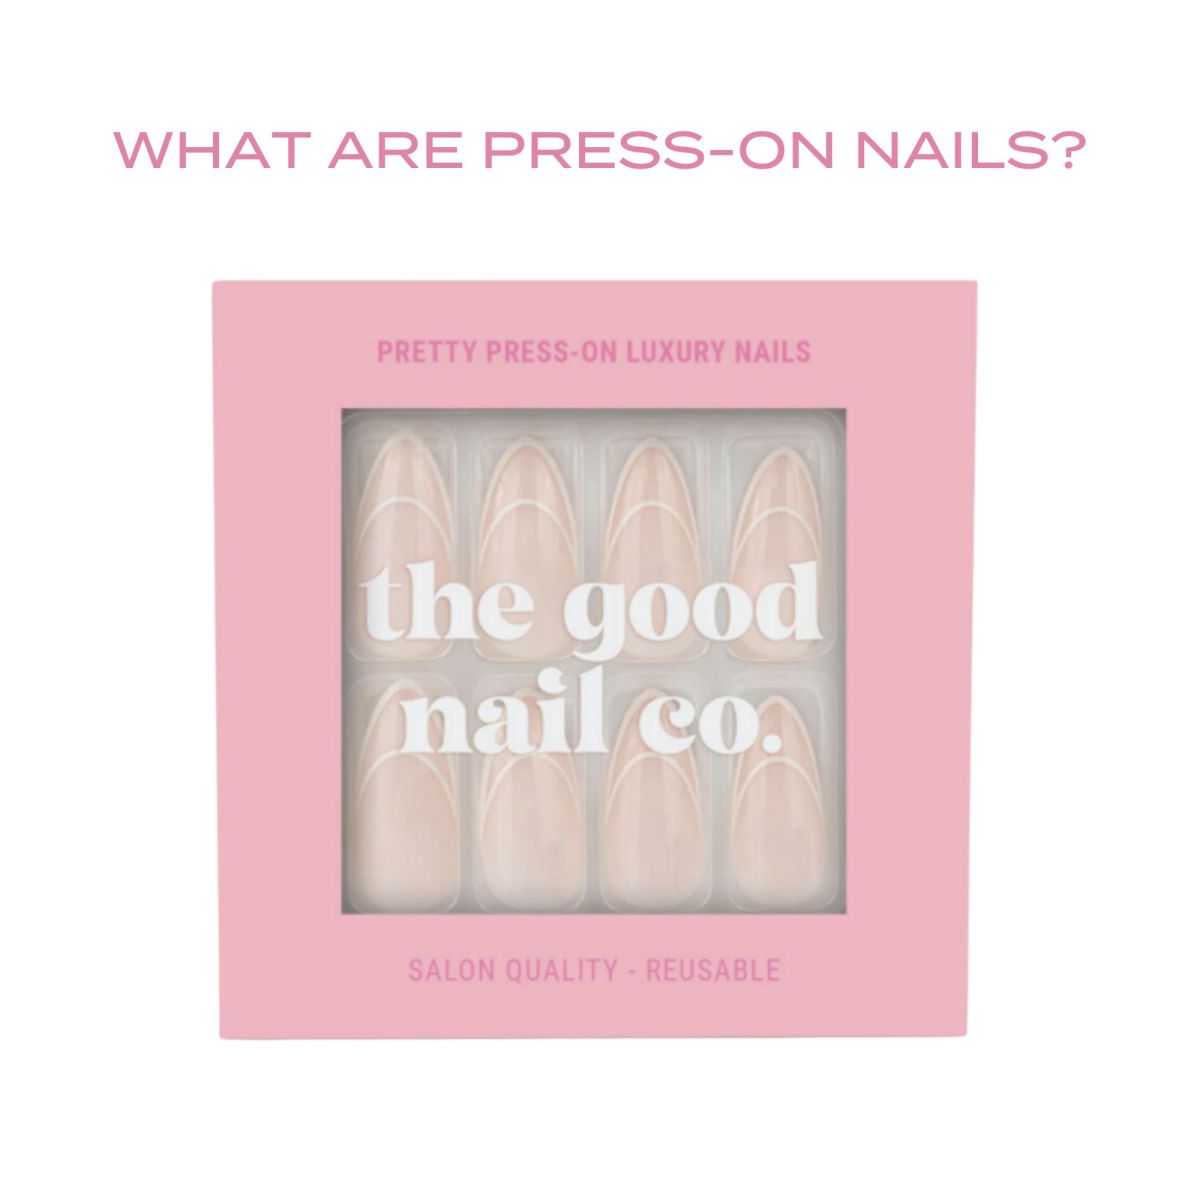 press-on nails